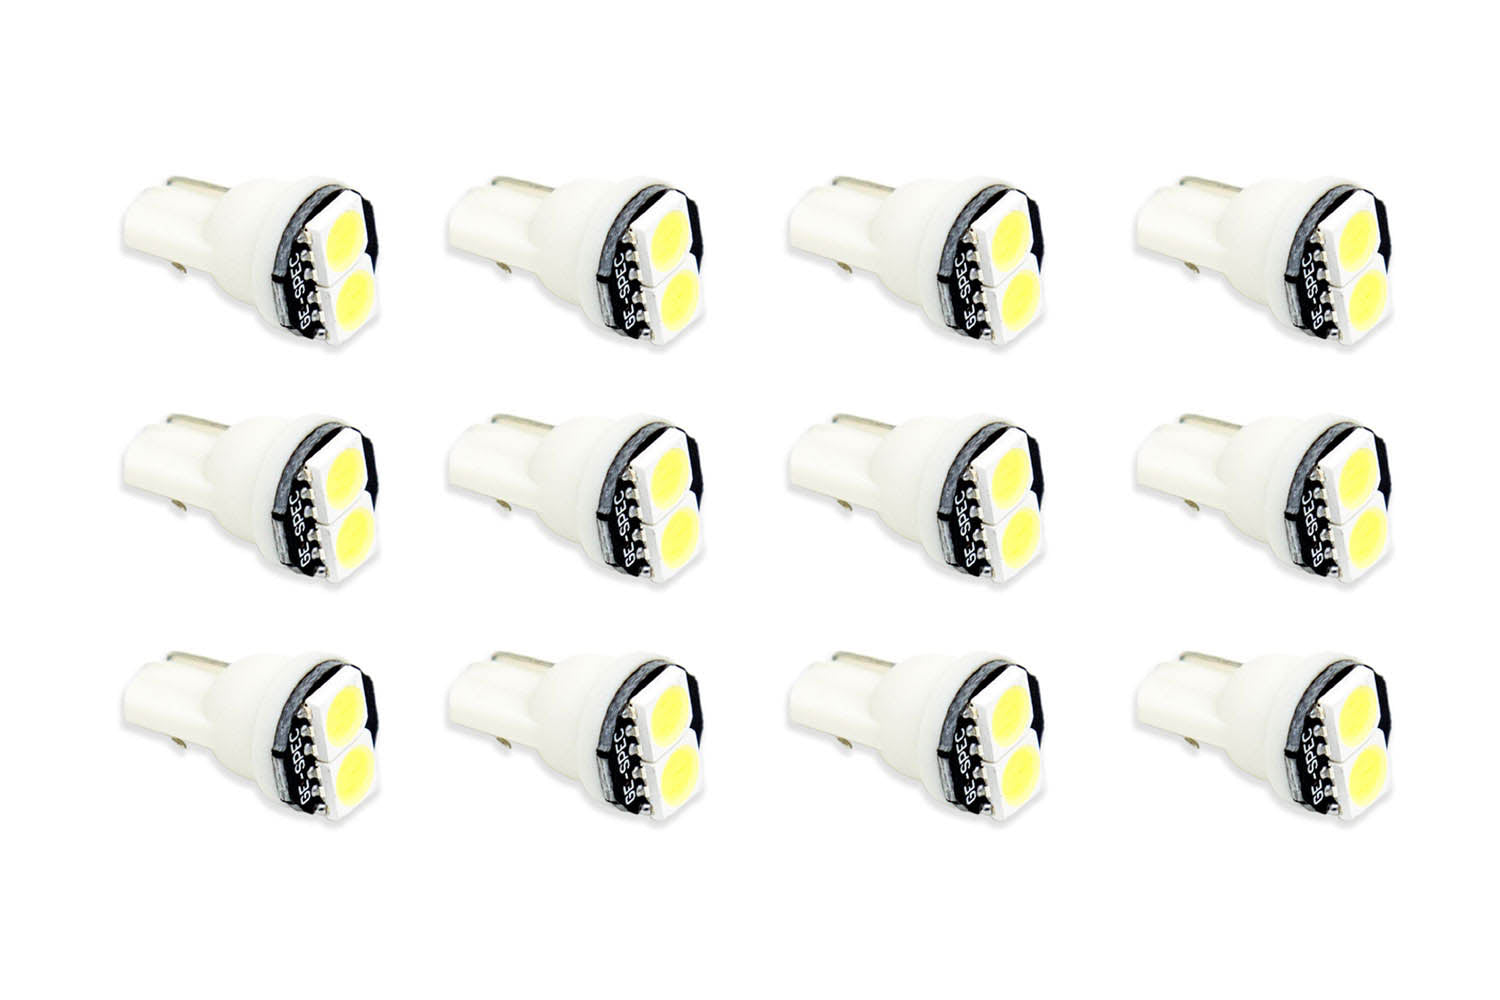 194 LED Bulb SMD2 LED Warm White Set of 12 Diode Dynamics